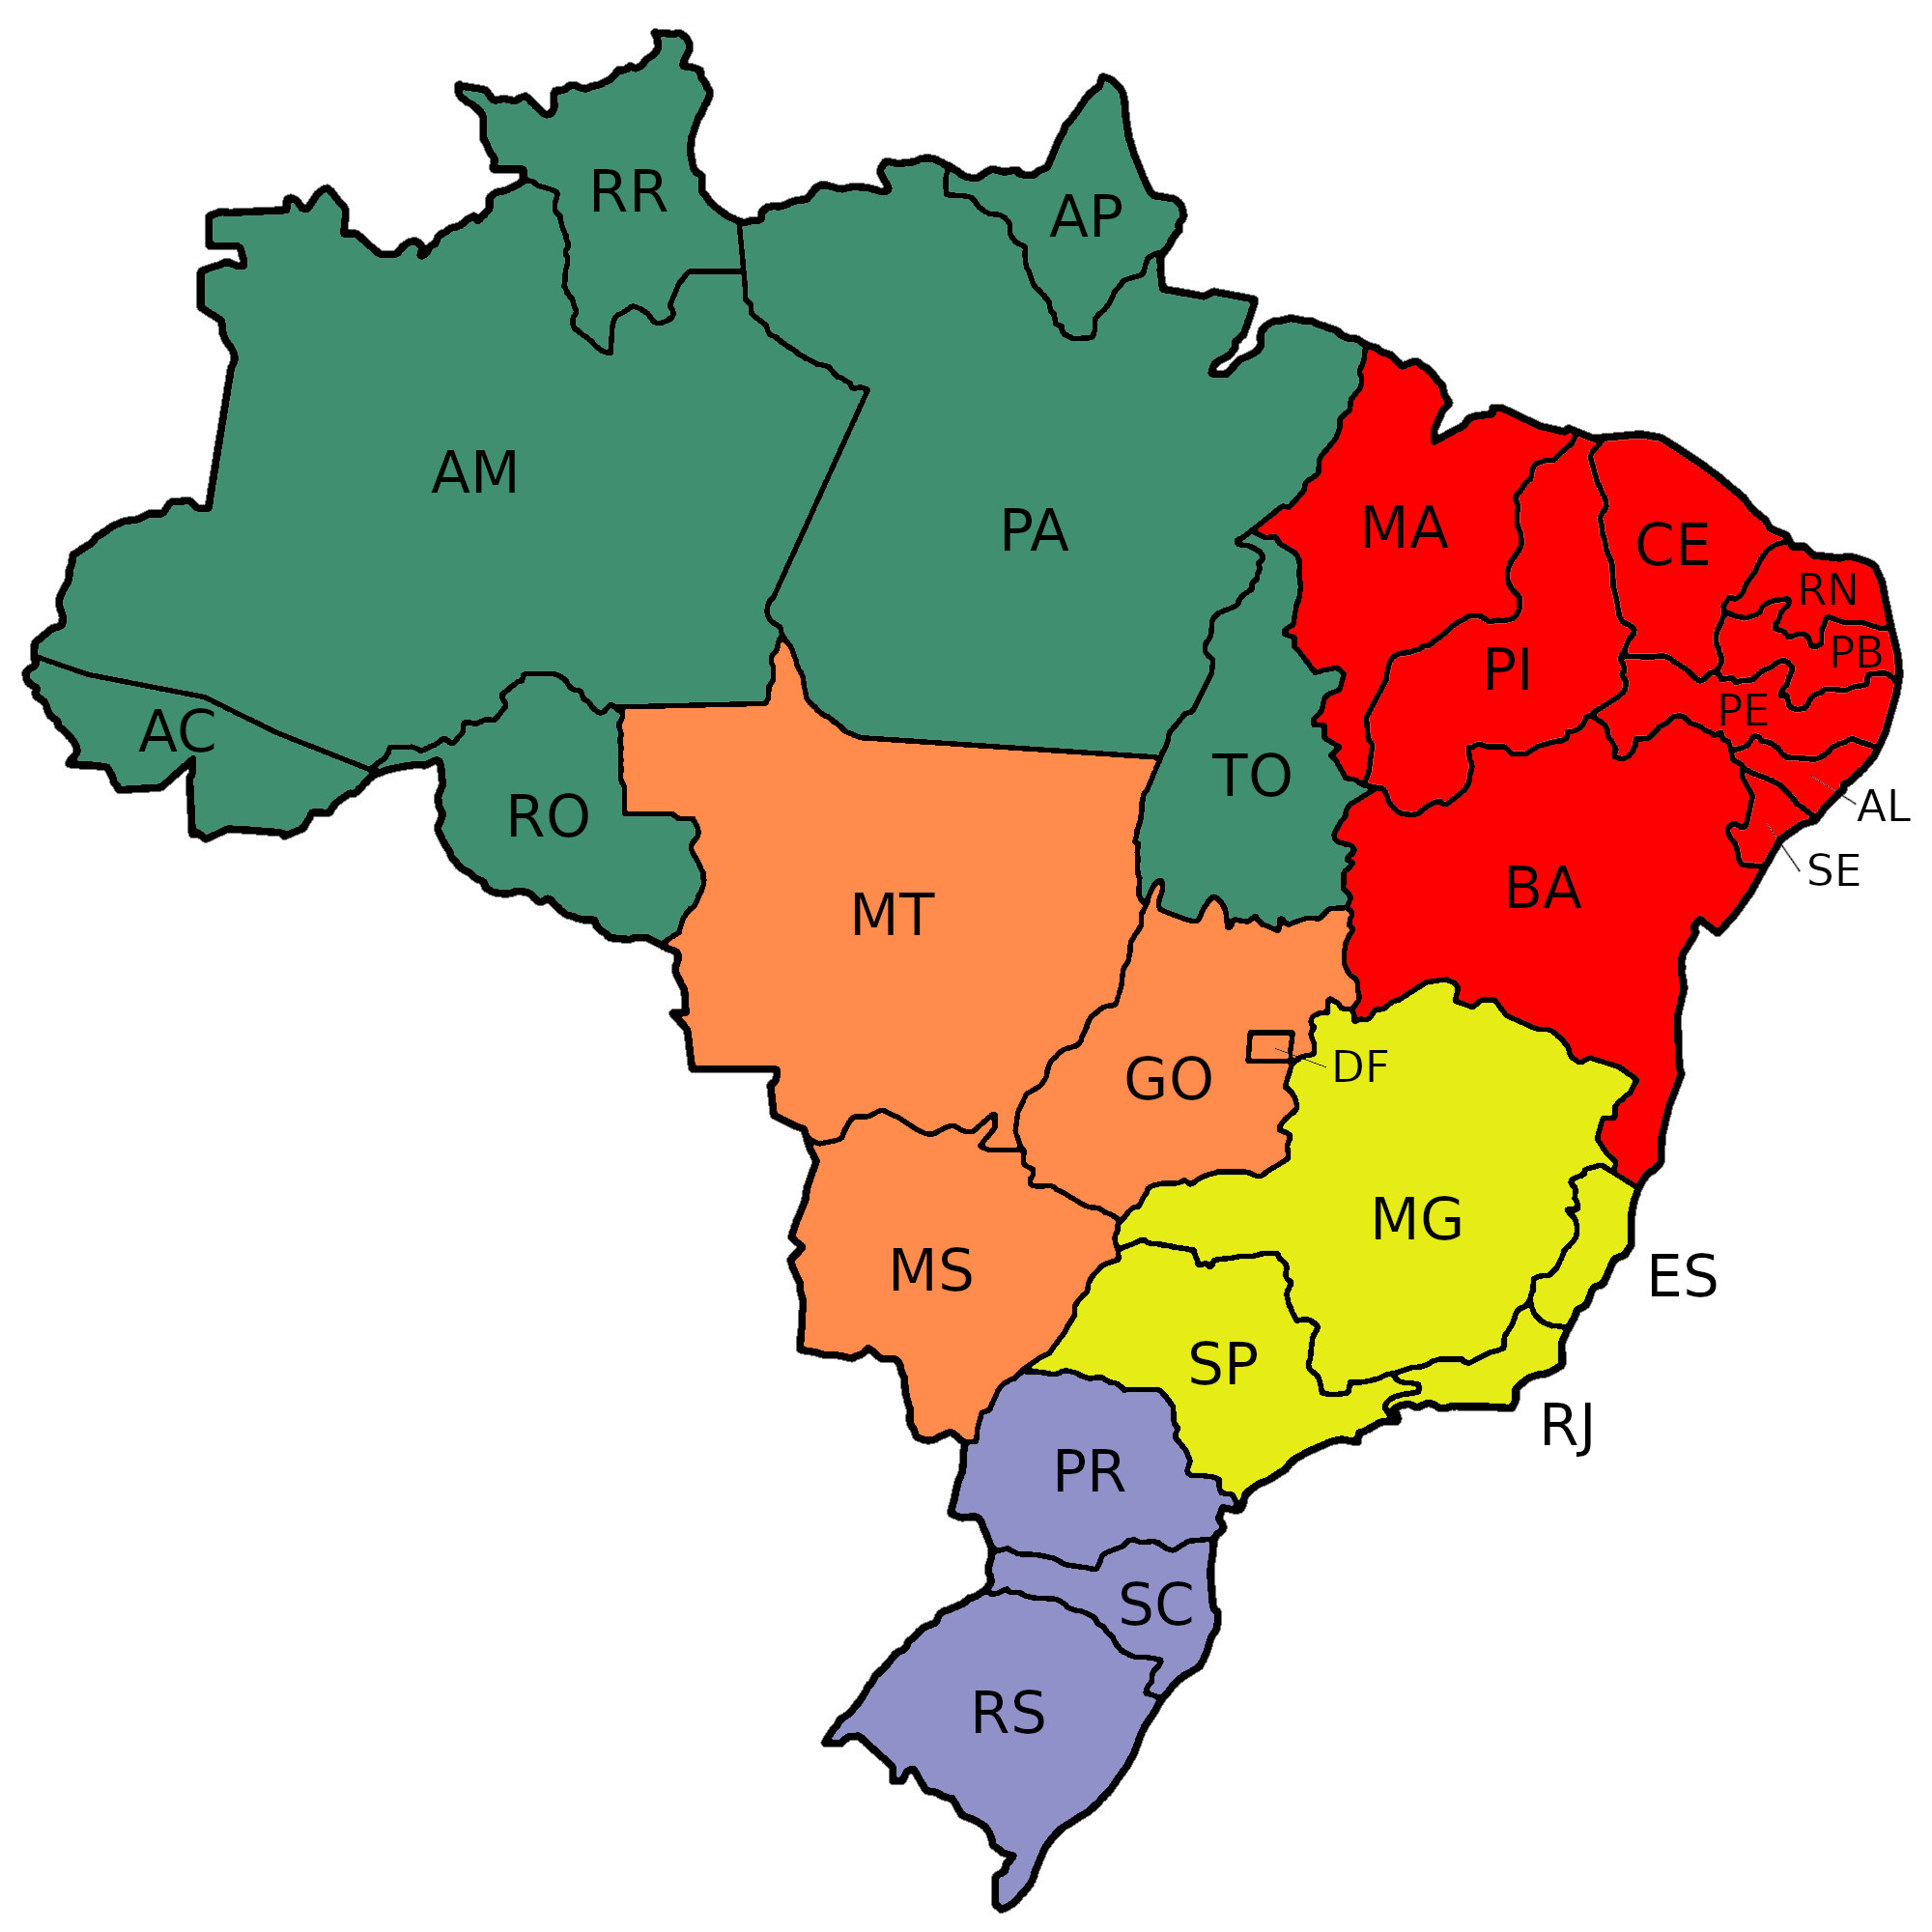 Mapa do Brasil adaptado